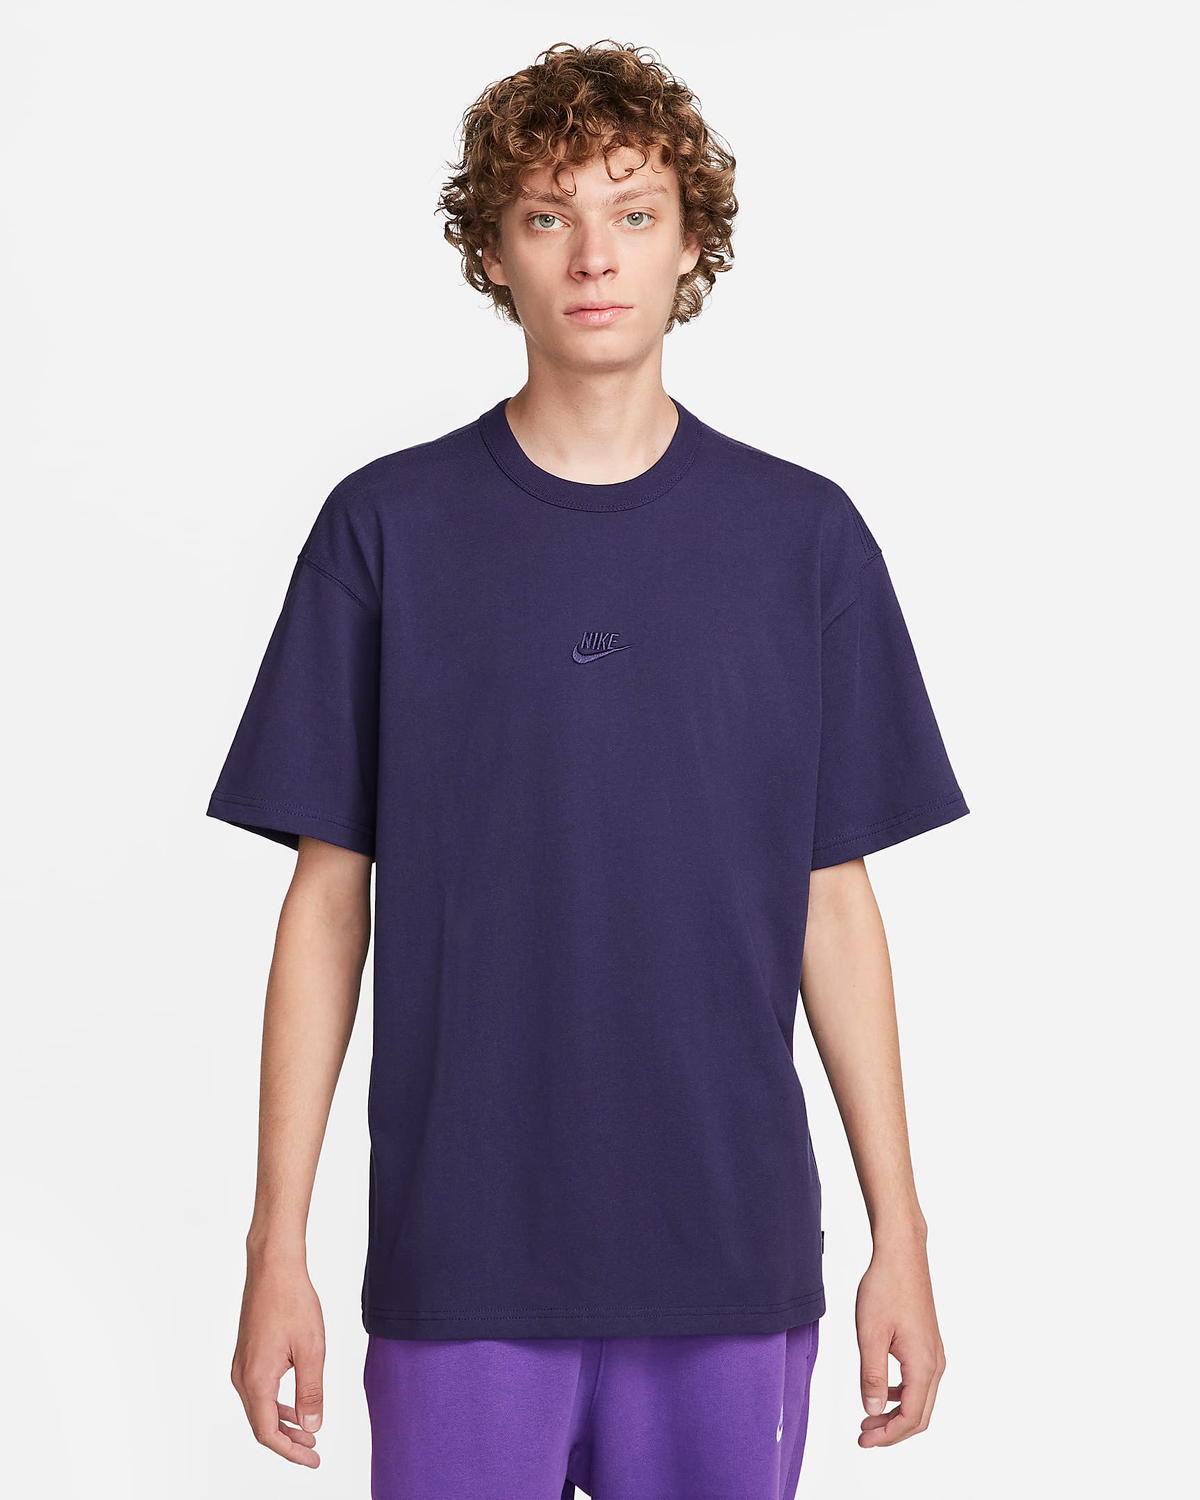 Nike-Sportswear-Premium-Essentials-T-Shirt-Purple-Ink